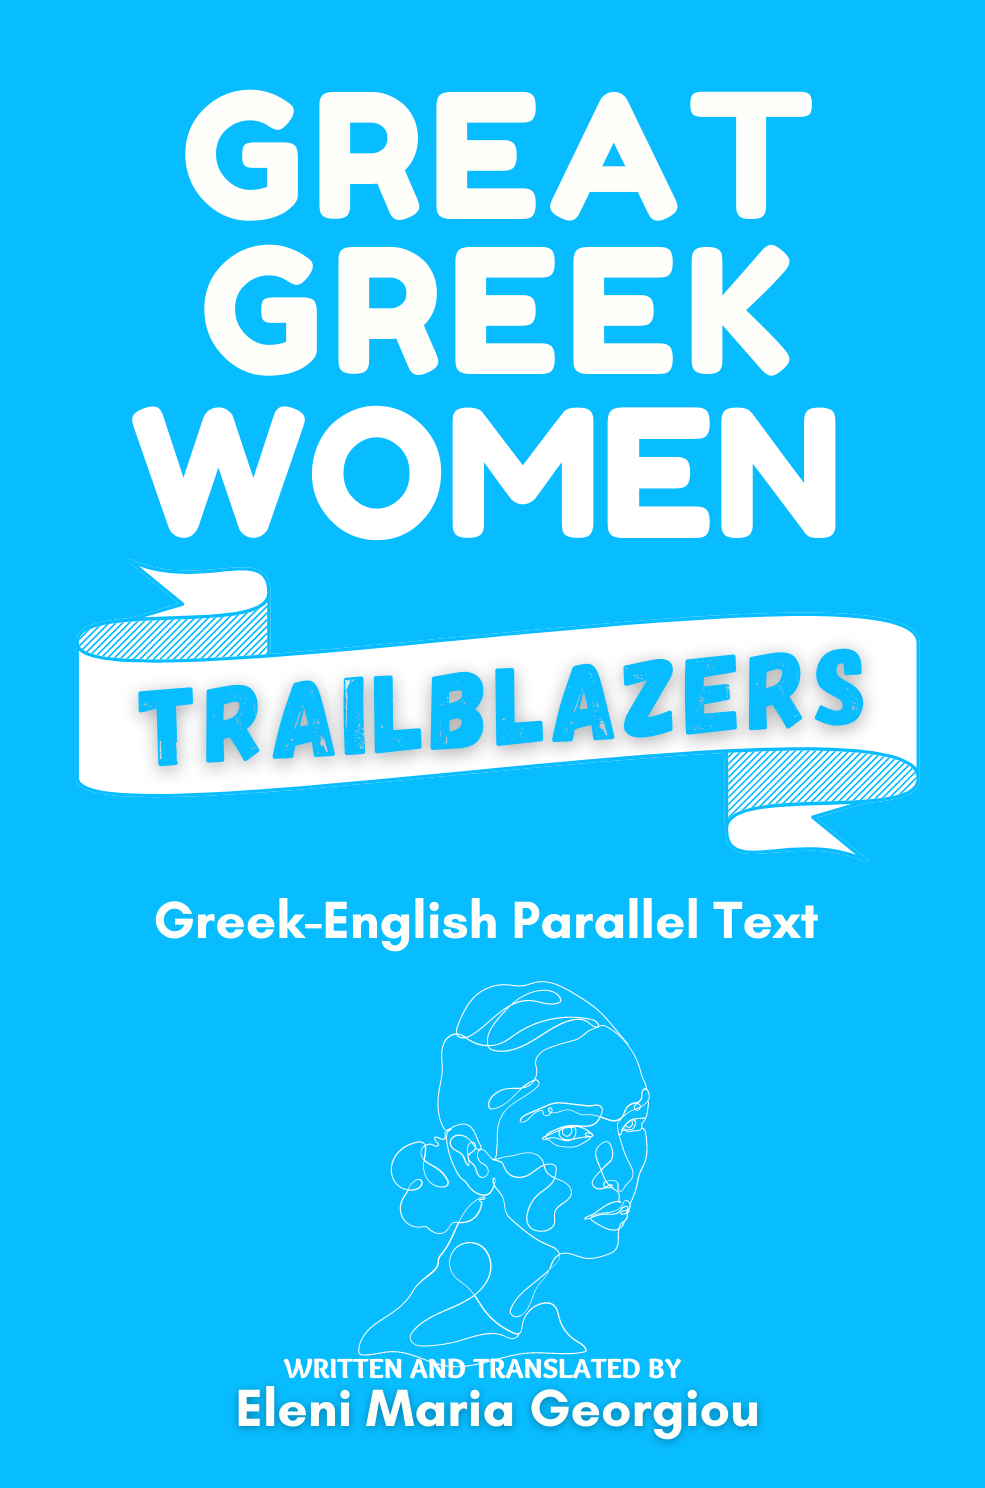 Great Greek Women Trailblazers: Greek-English Parallel Text